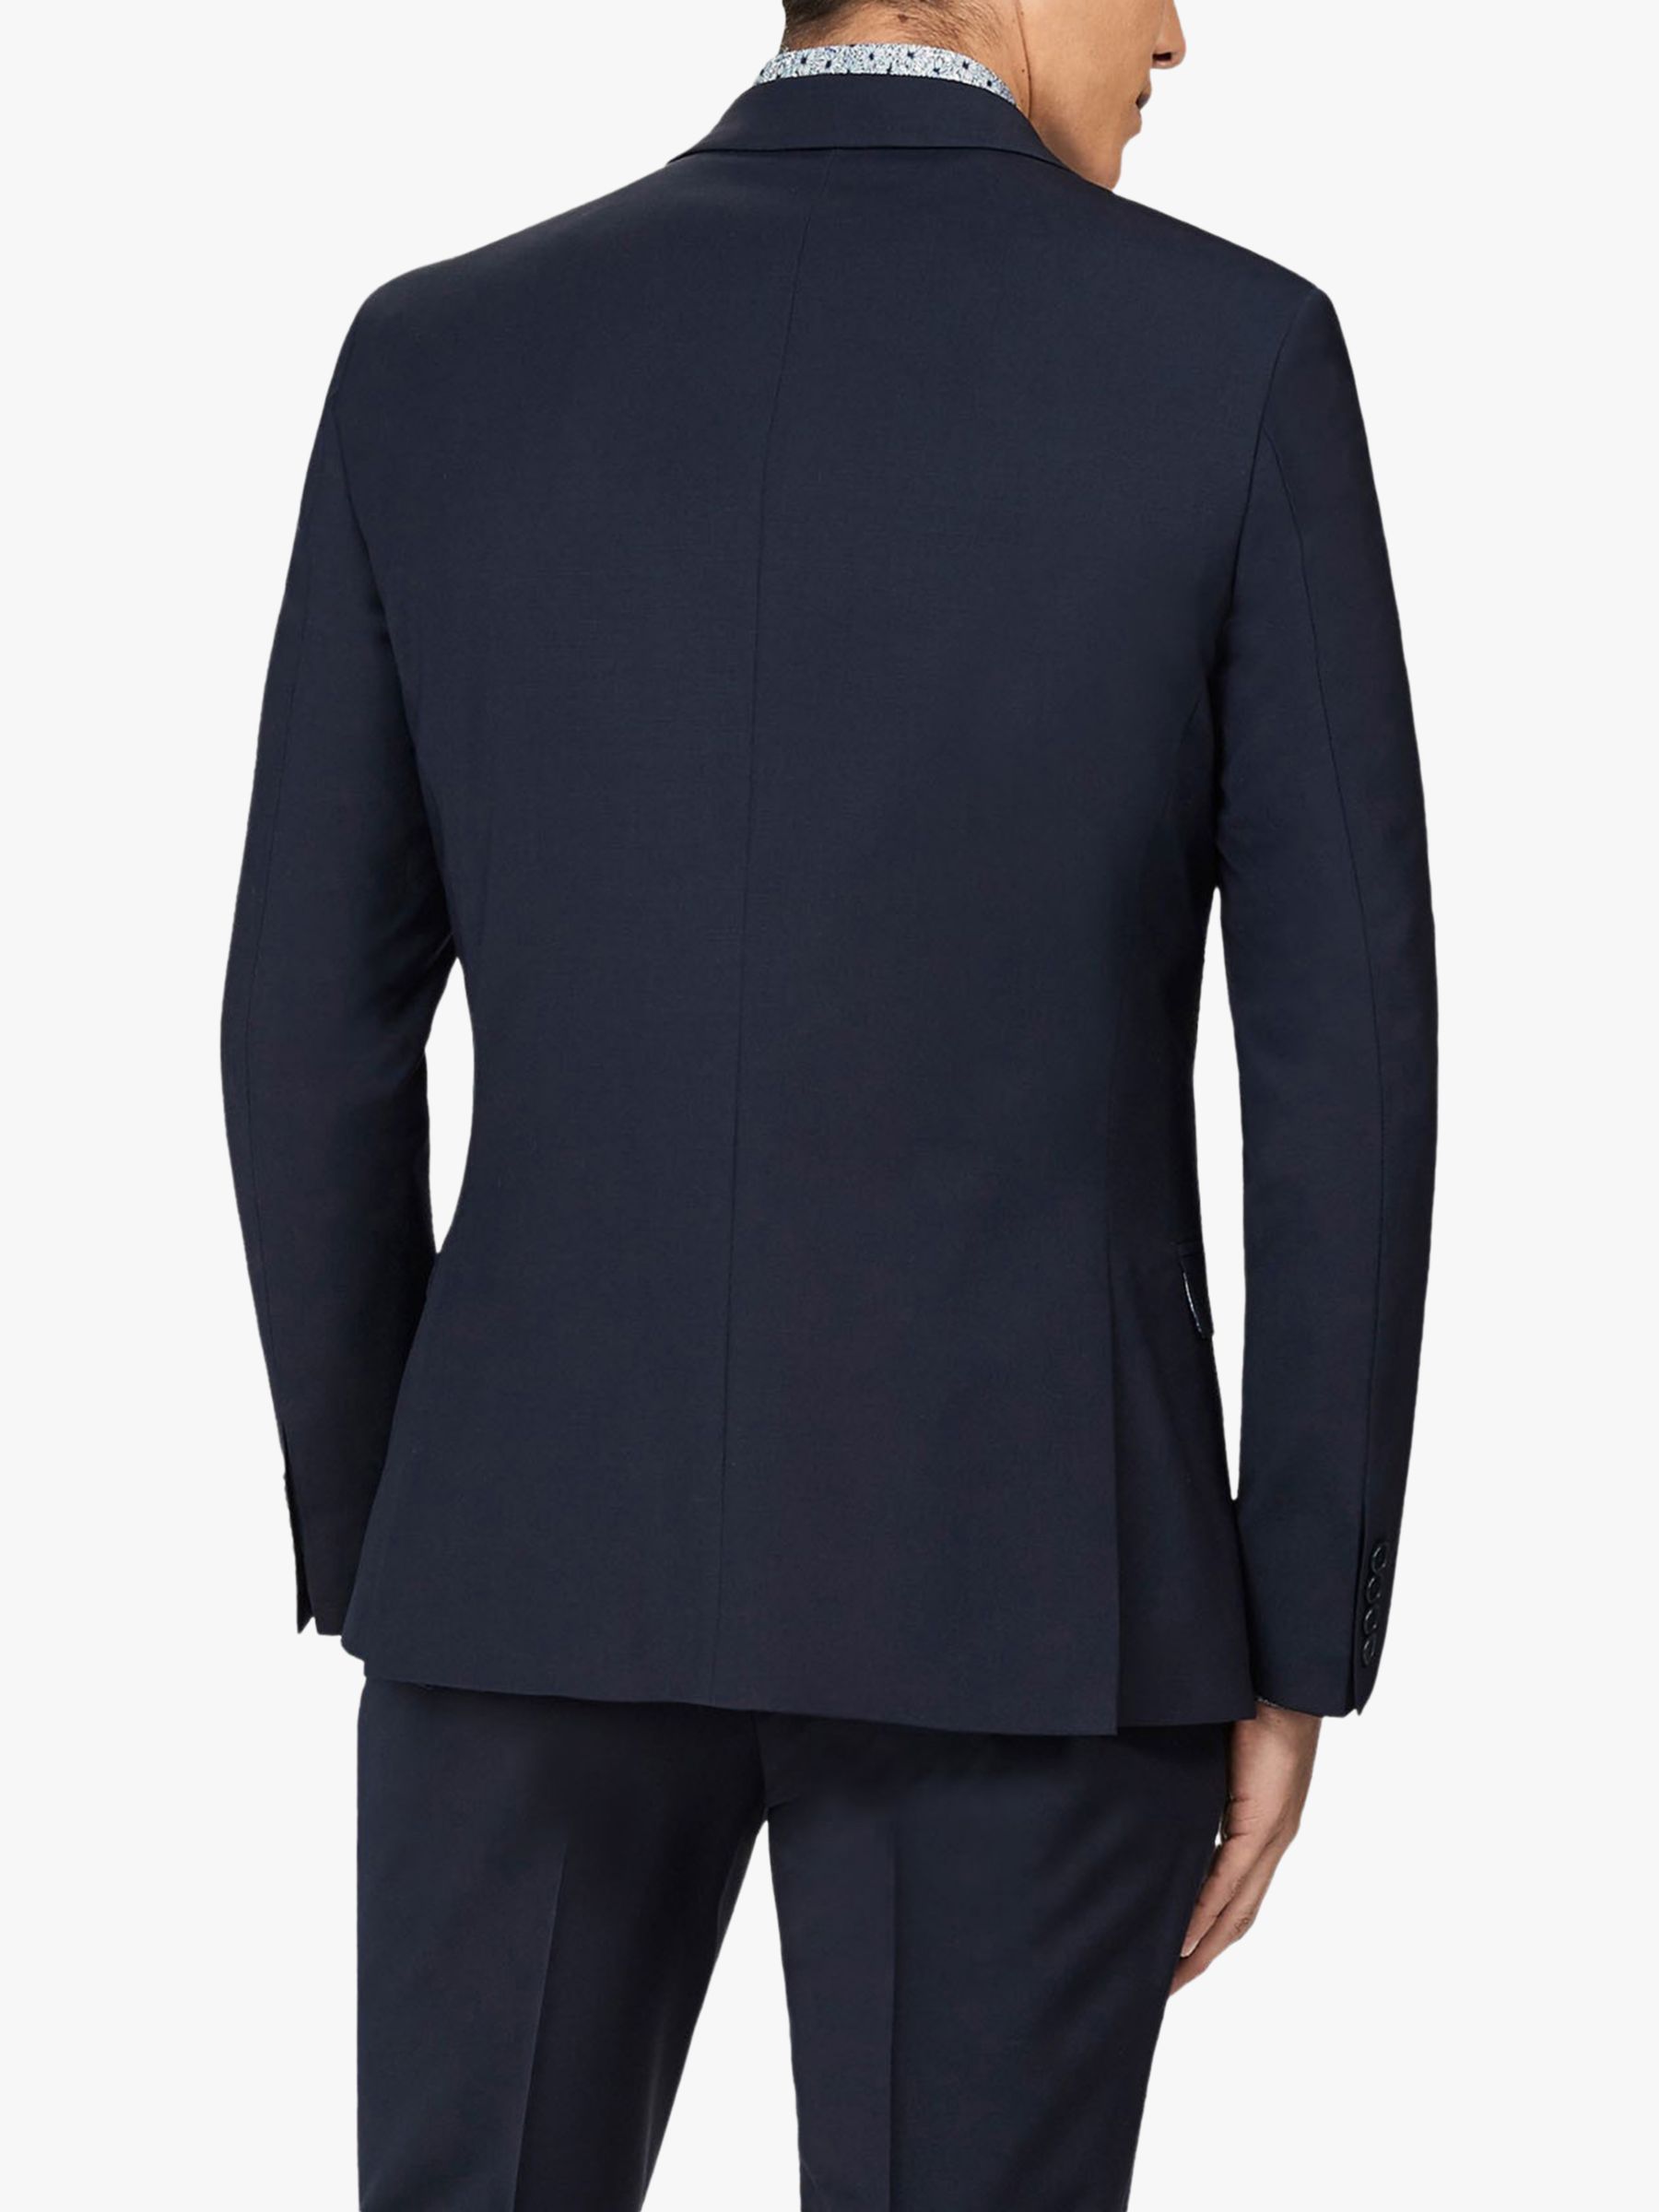 Ted Baker Panama Wool Blend Suit Jacket, Navy, 38S